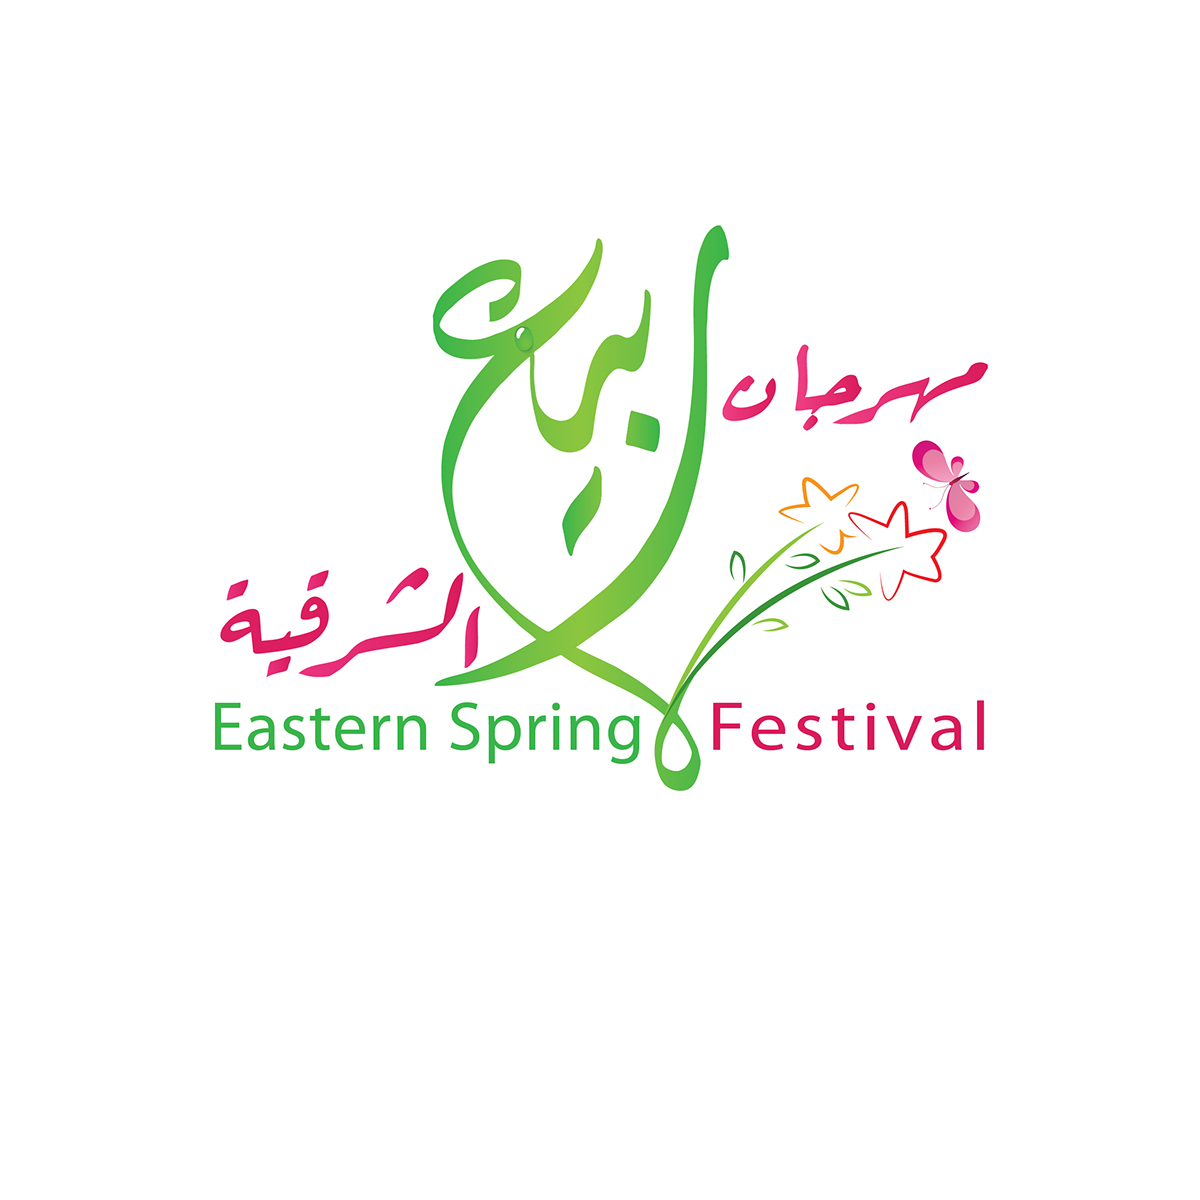 Spring Eastern F #Festival